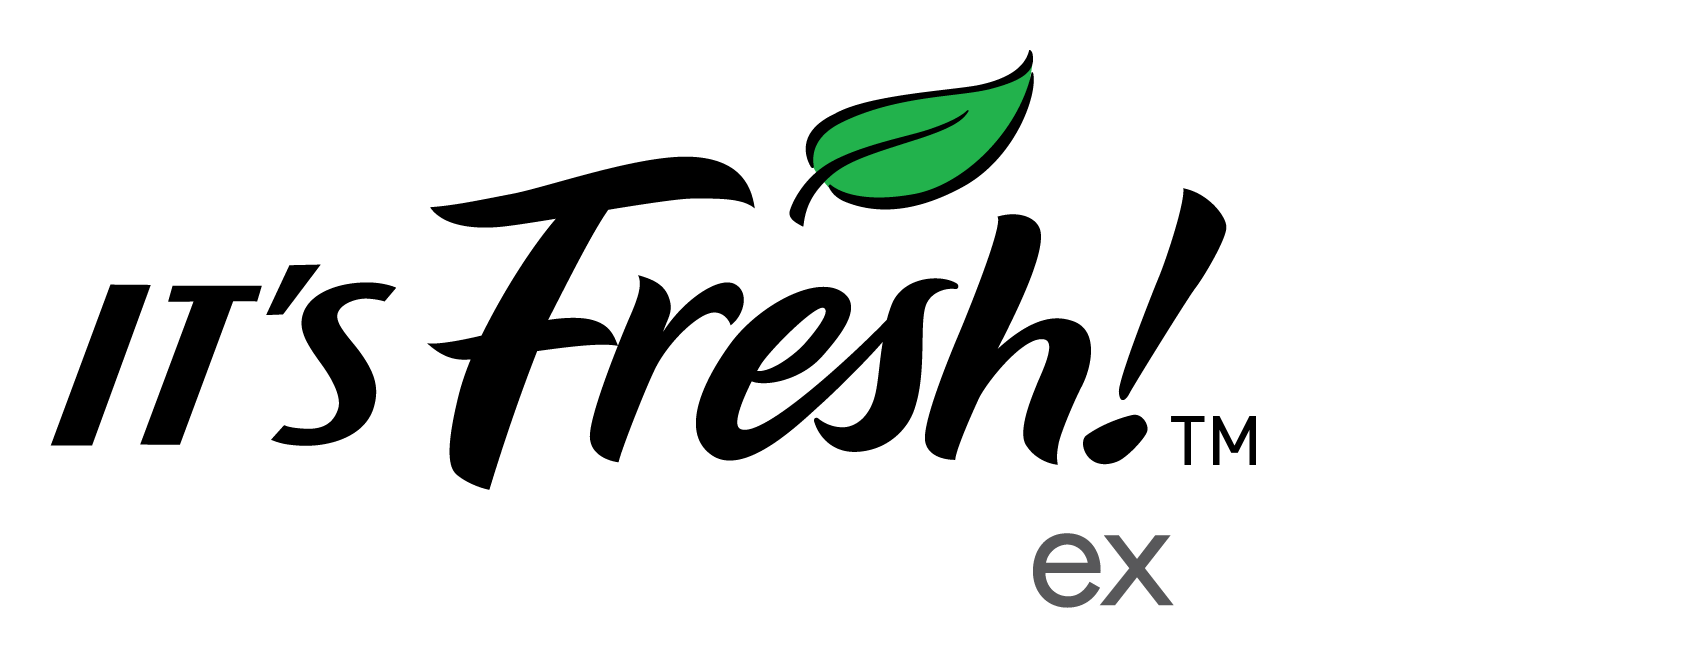 Fresh Logo - It's Fresh! Food Freshness Technology Holdings. A high tech